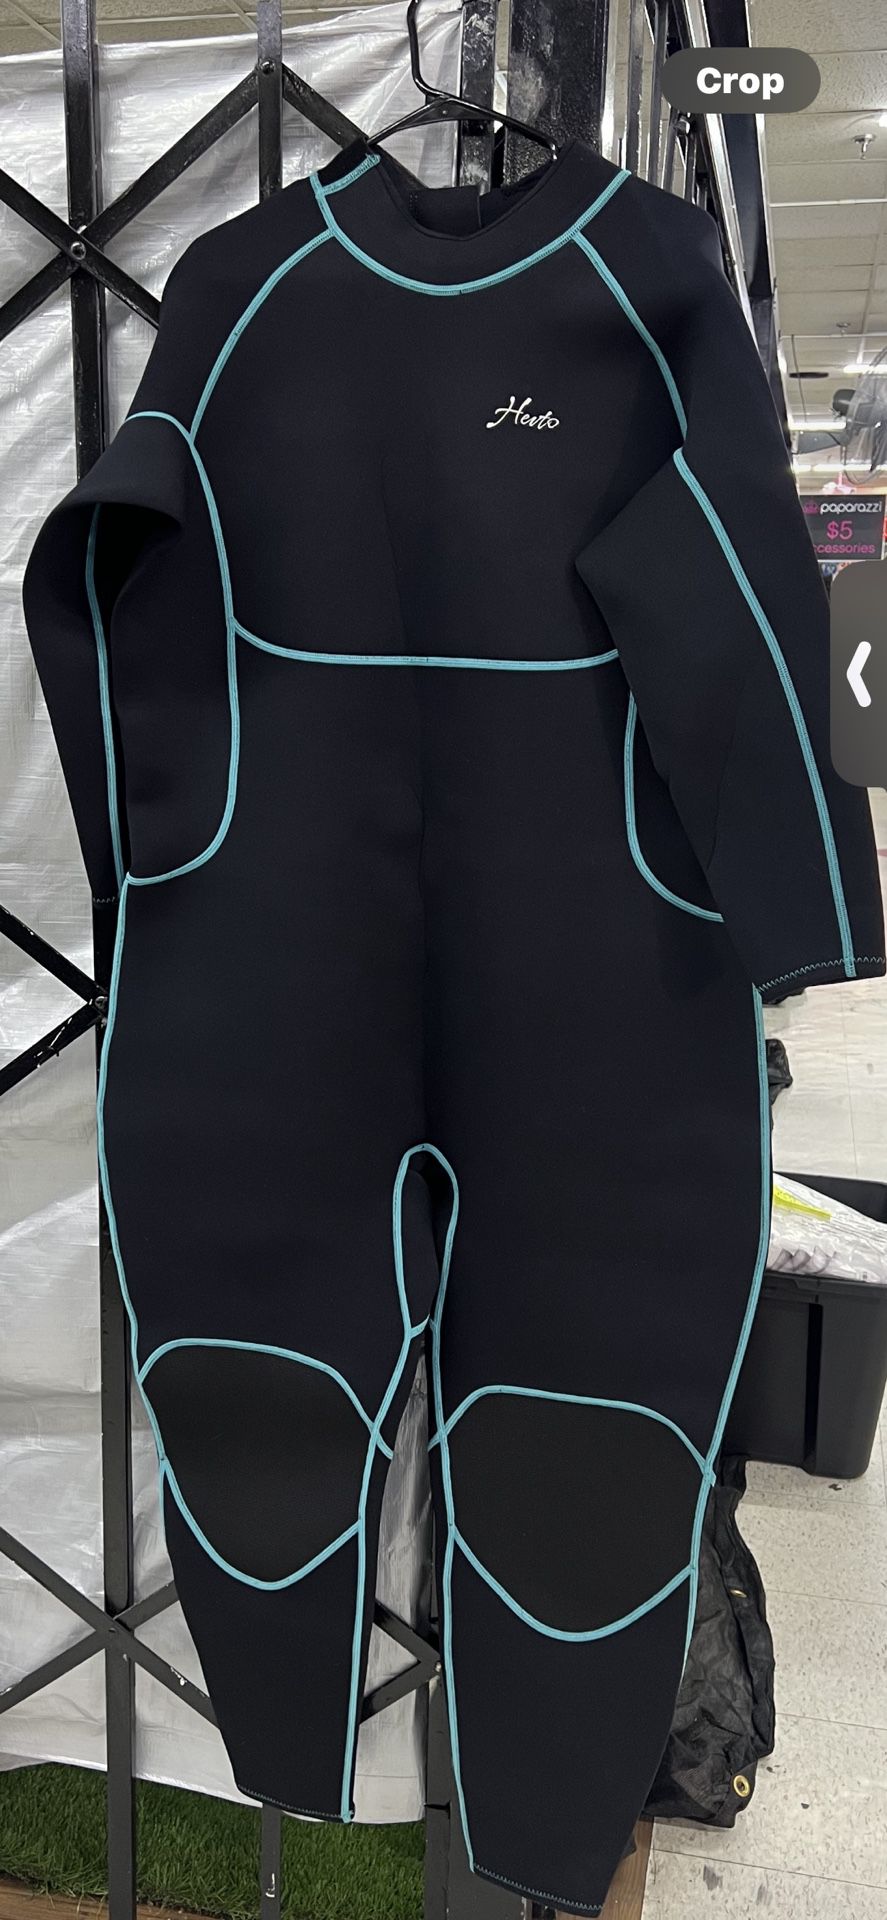 Hevto Plus Size Wetsuit Men Women 3/2mm 5/4mm Neoprene Full Shorty Wet Suit Back Zip Swimming Keep Warm in Cold Water